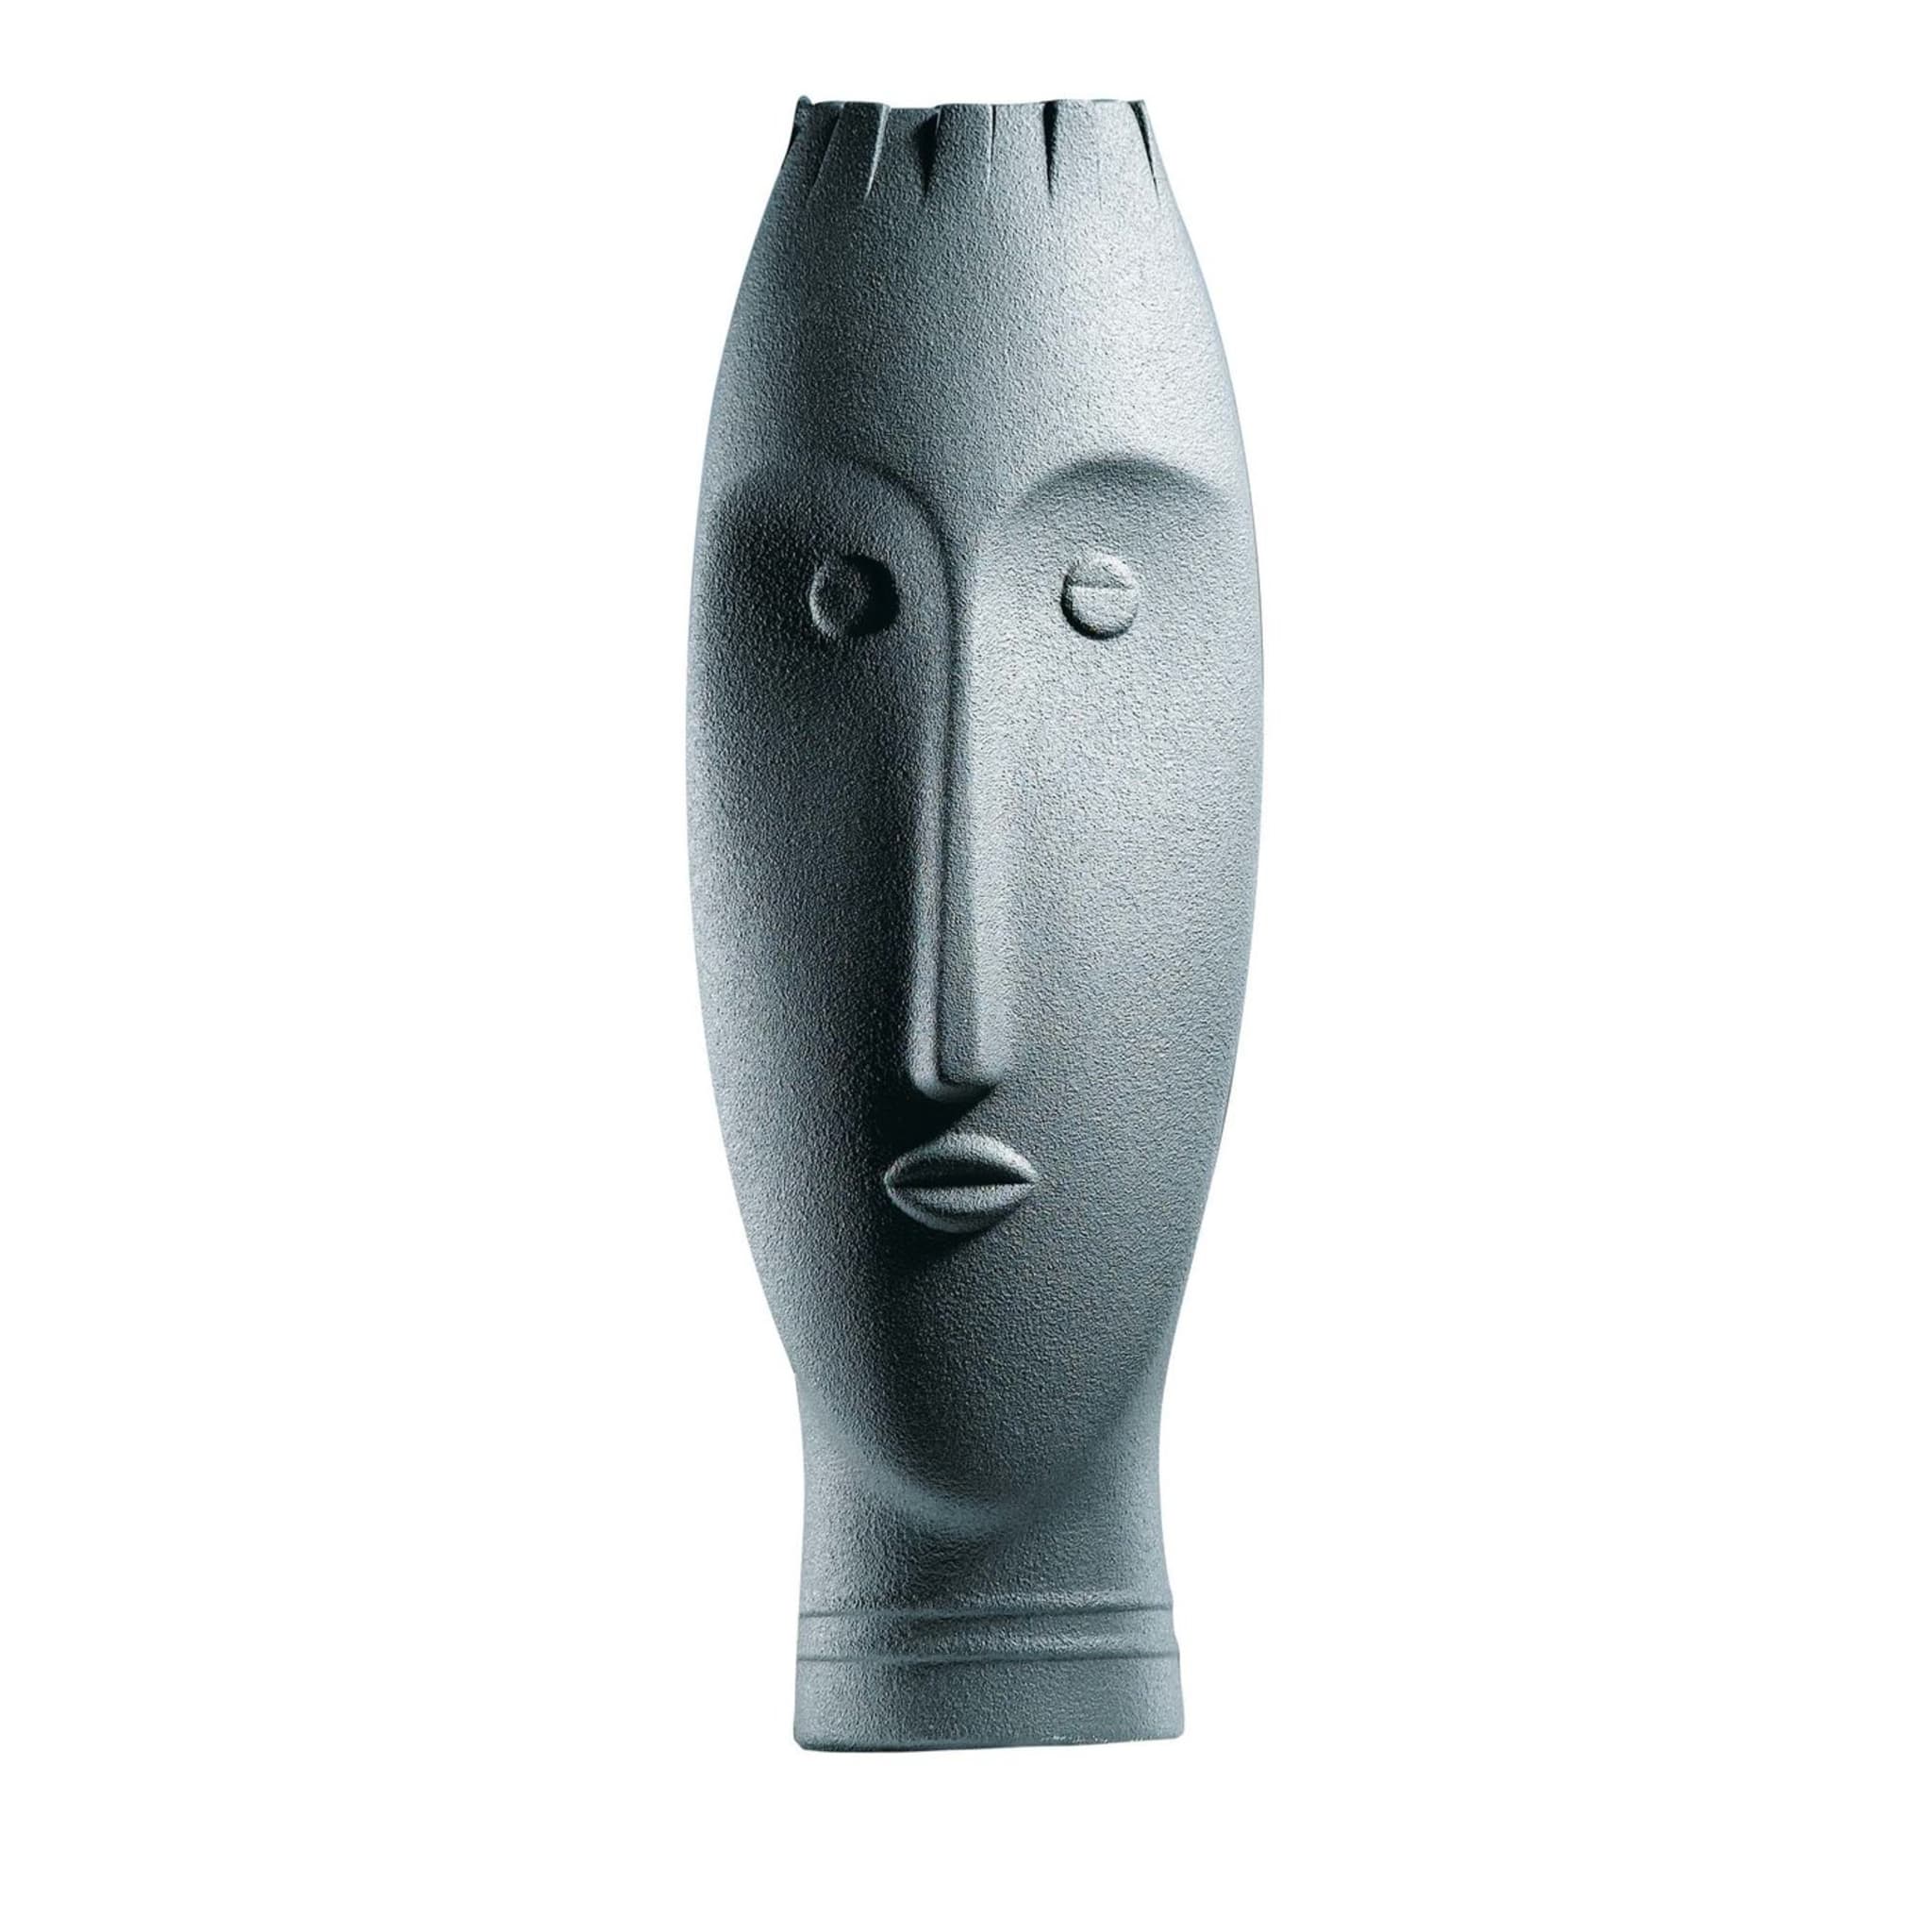 Face Vase by Giuseppe Bucco - Main view